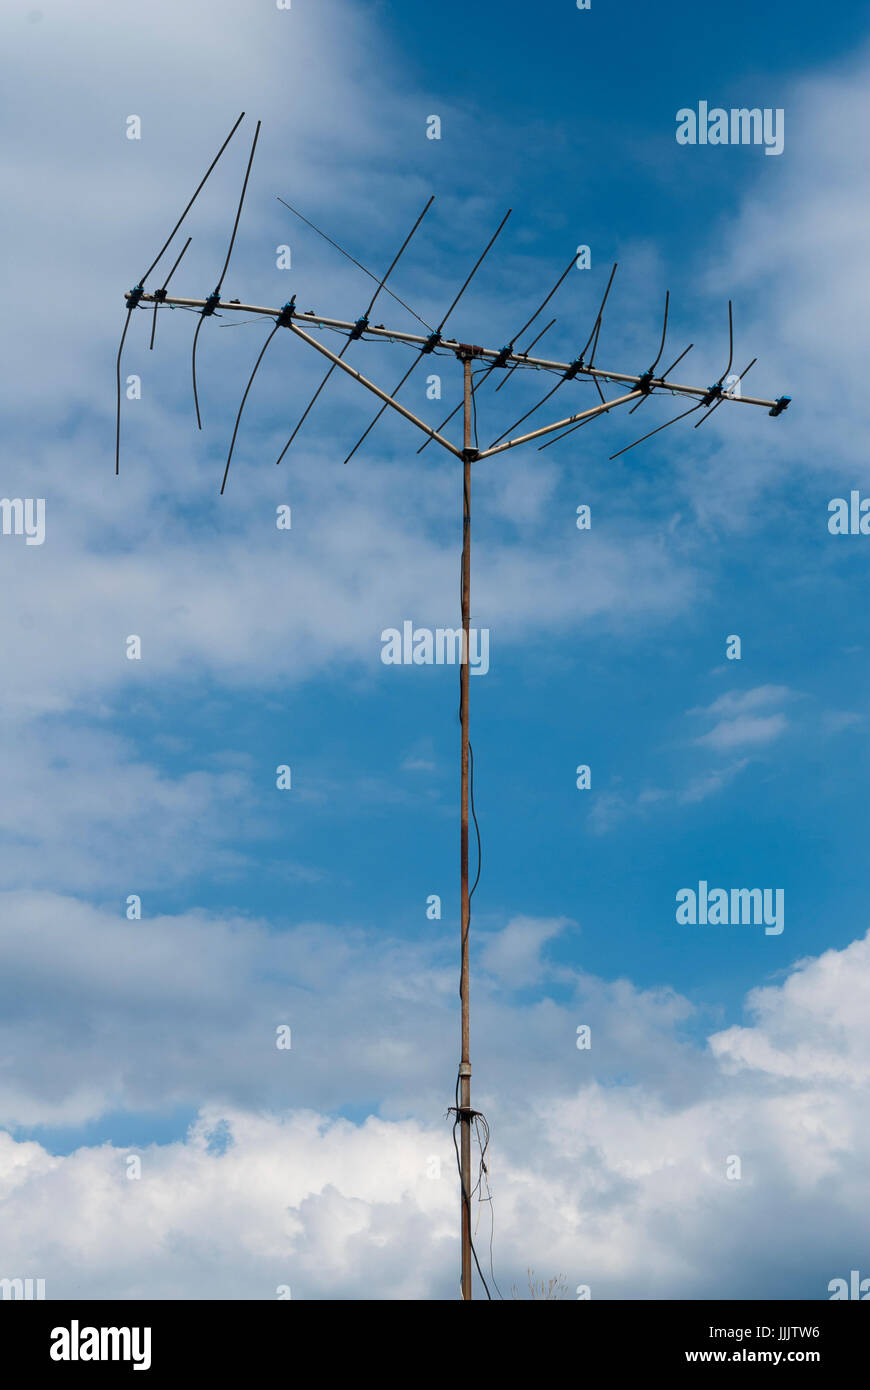 1960s tv antenna Imágenes recortadas de stock - Alamy